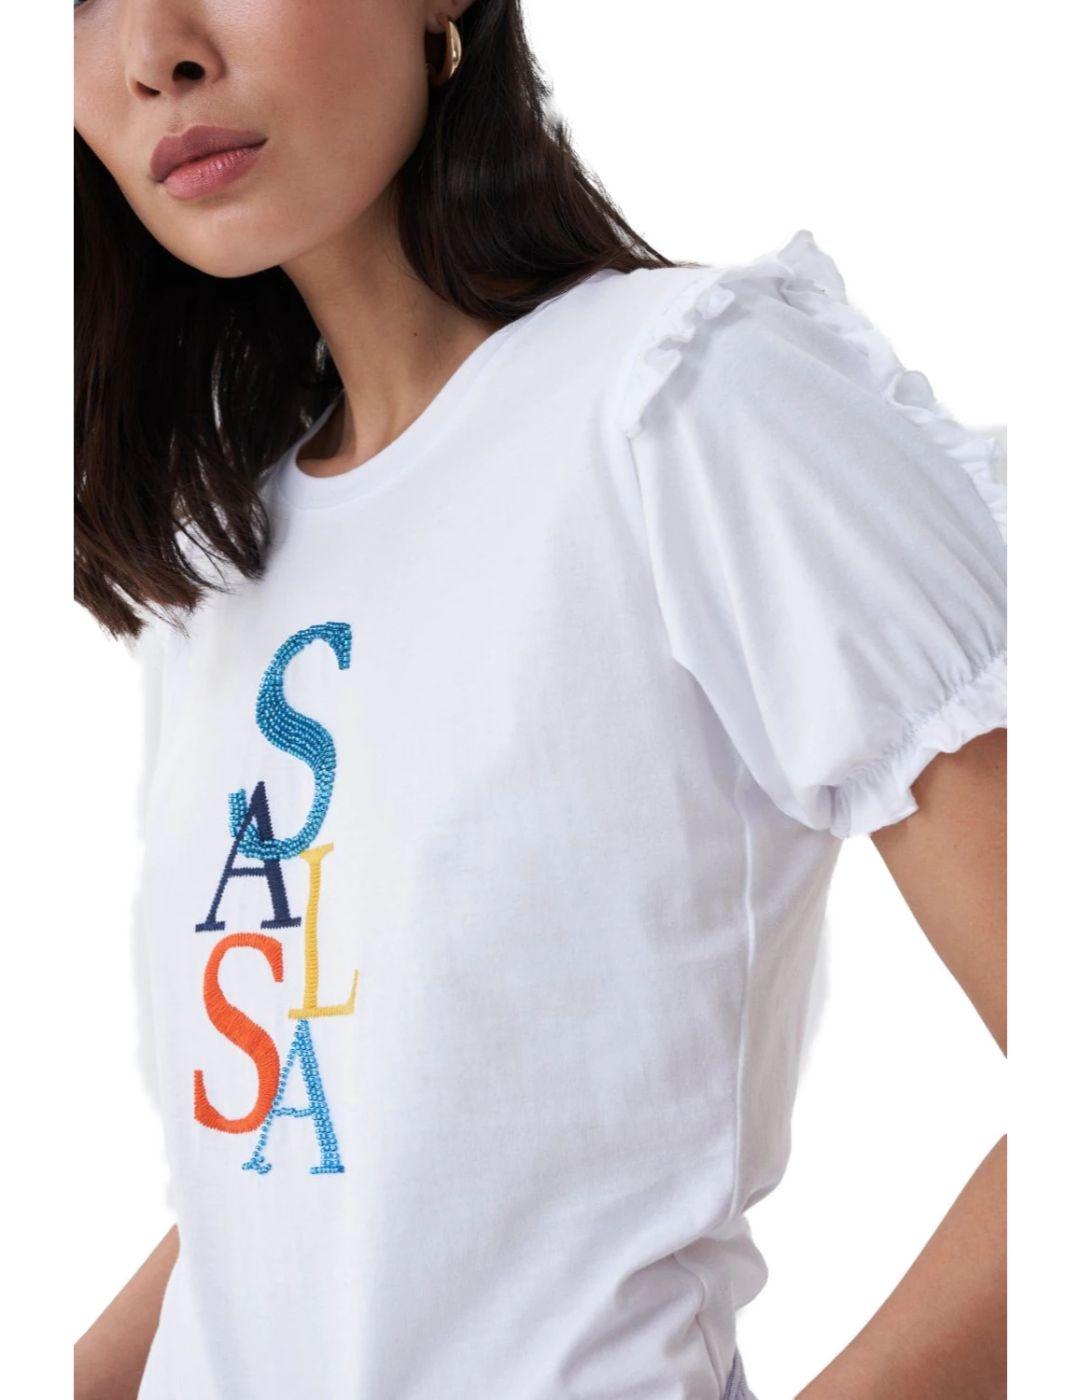 Camiseta logo Salsa blanca para mujer -a